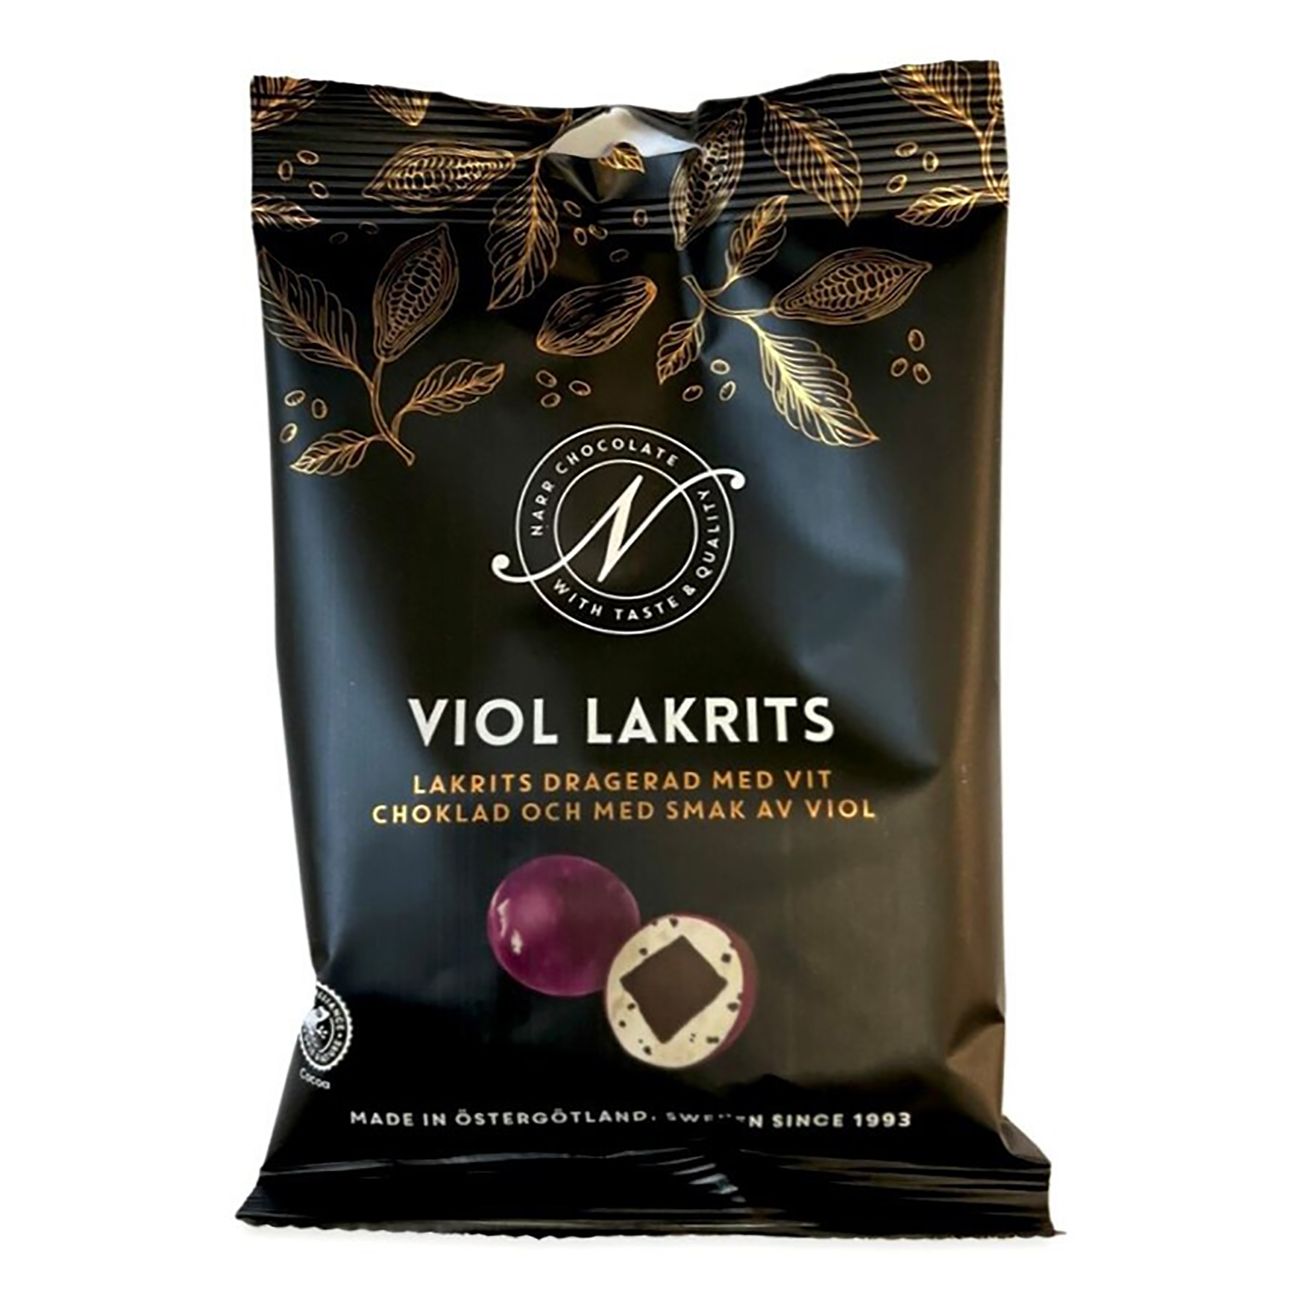 narr-chocolate-viol-lakrits-92574-1